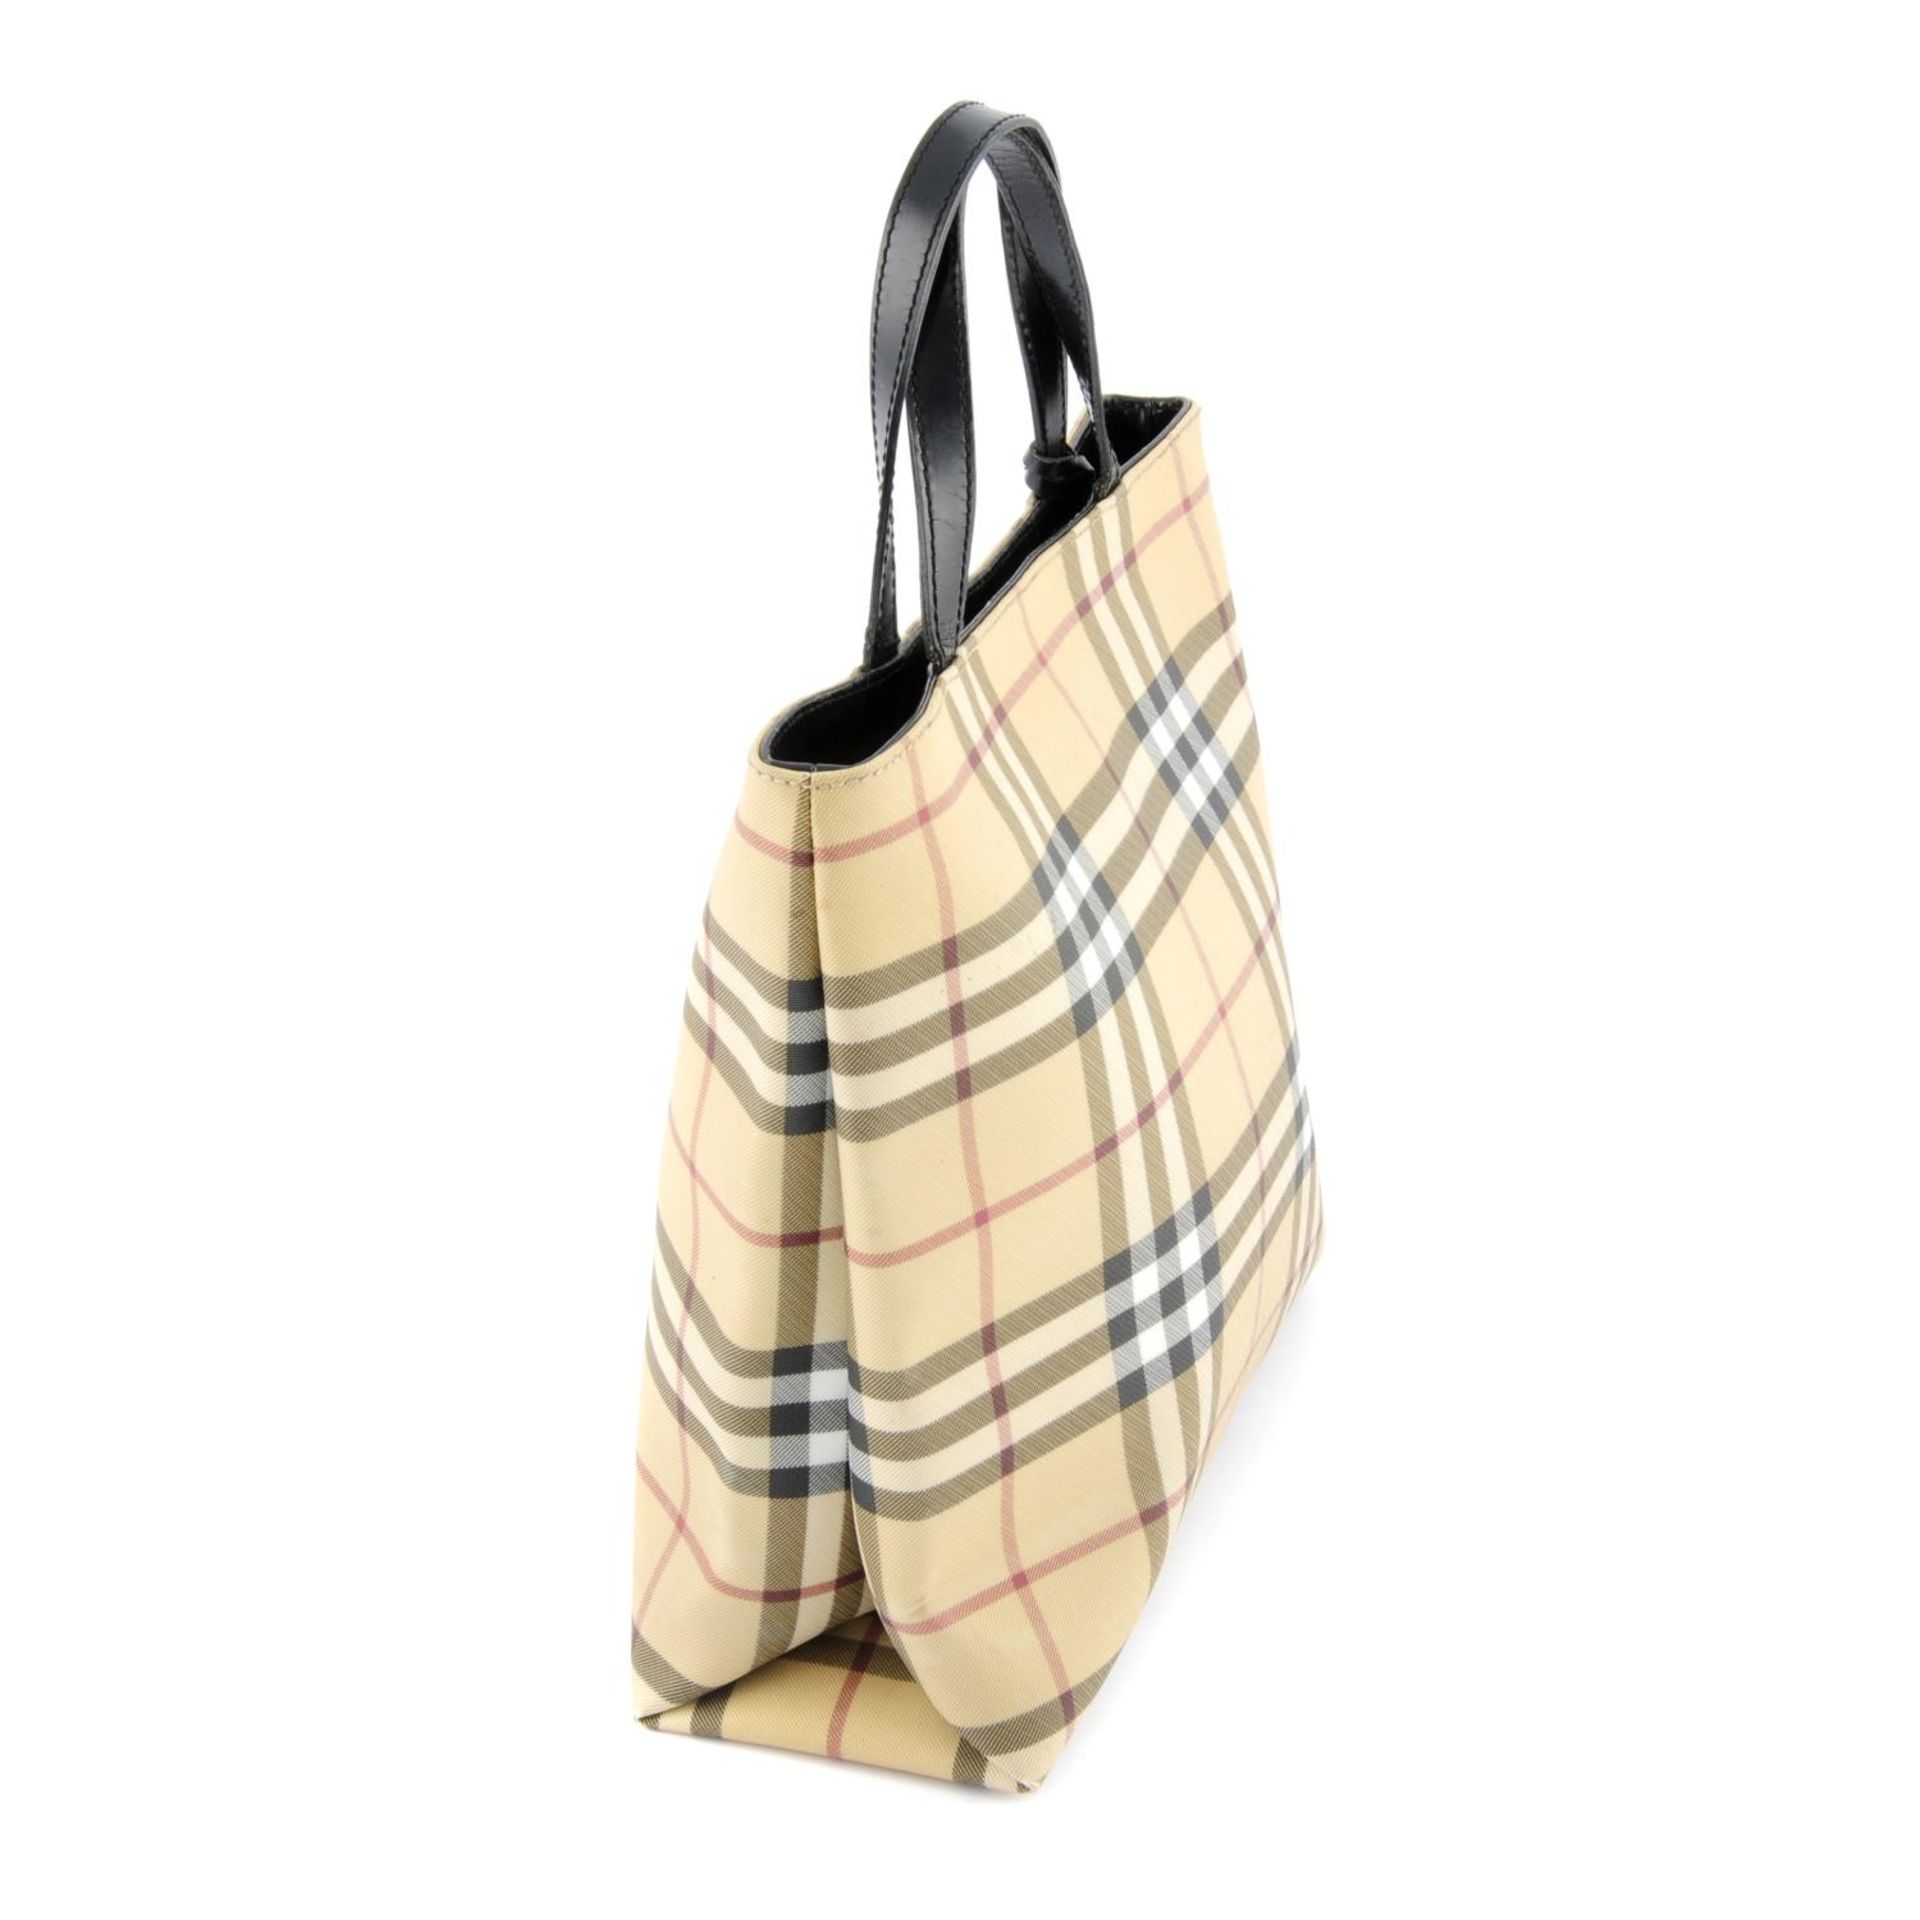 BURBERRY - a Nova Check coated canvas tote handbag. - Image 3 of 5